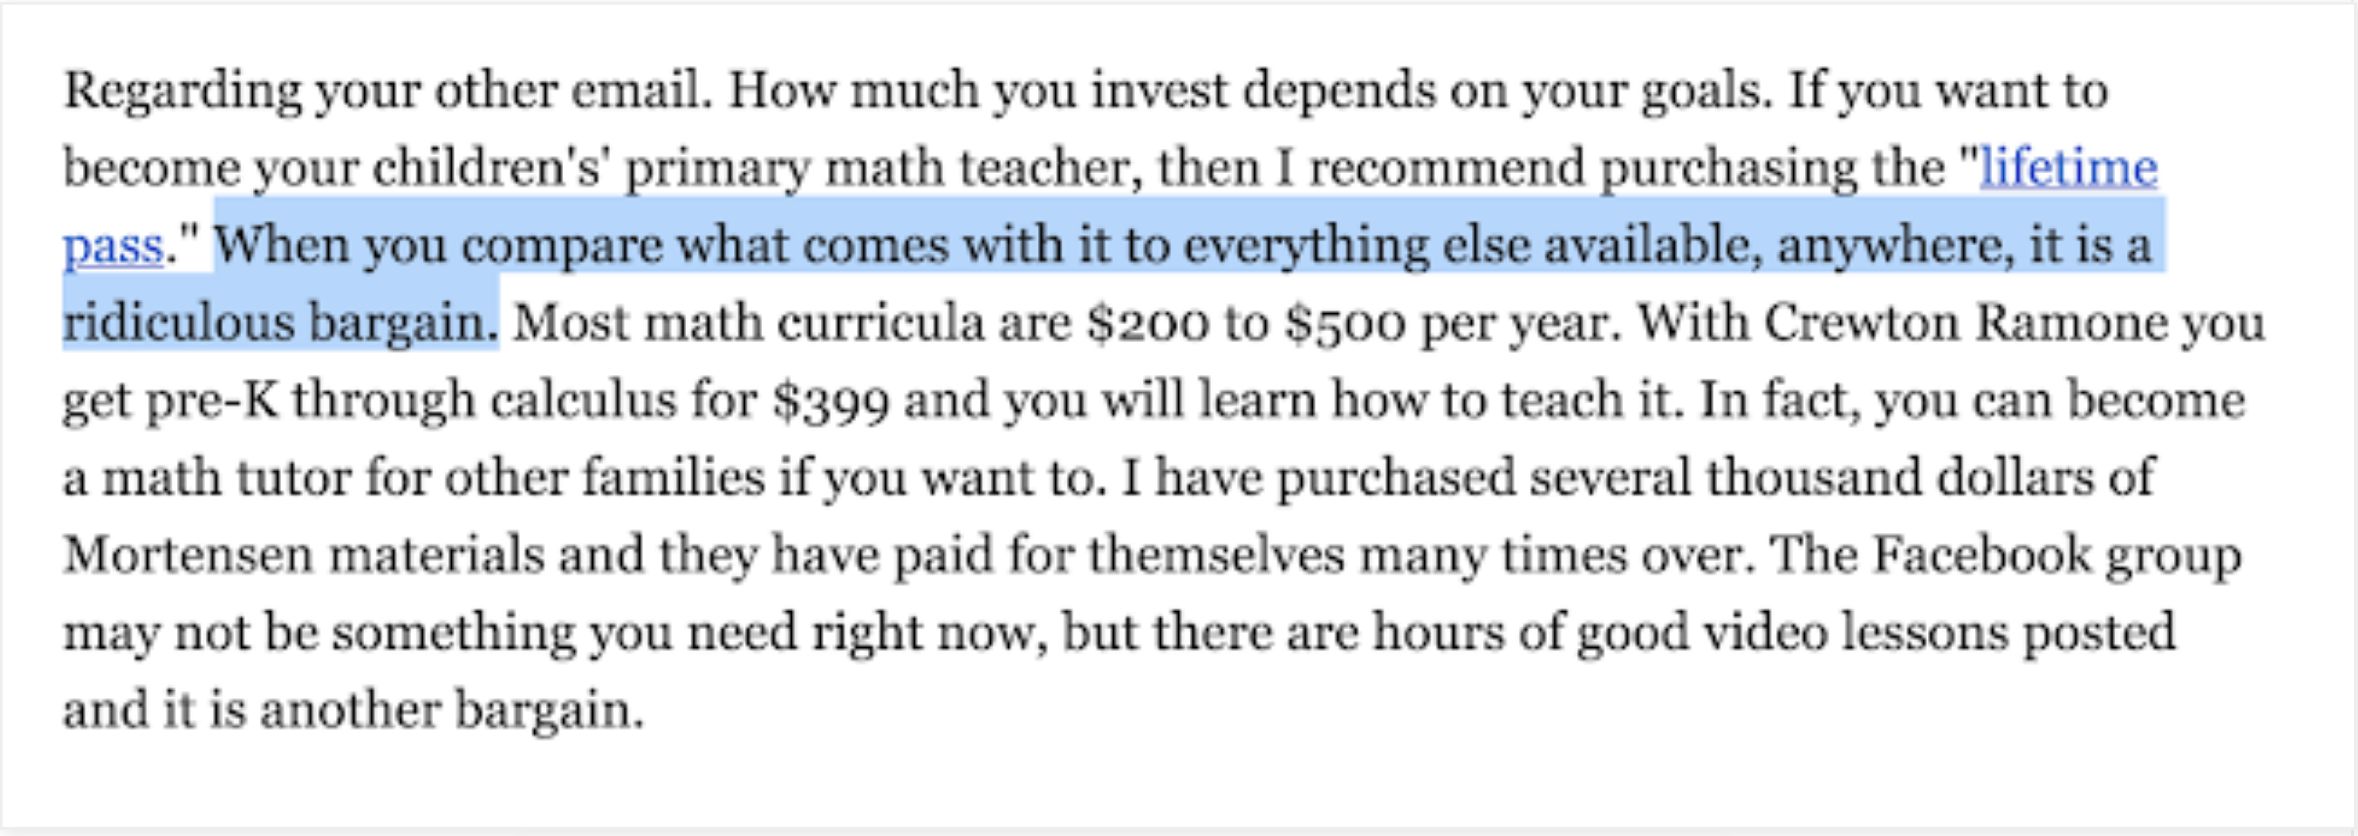 Crewton Ramone testimonial for homeschool math teachers.